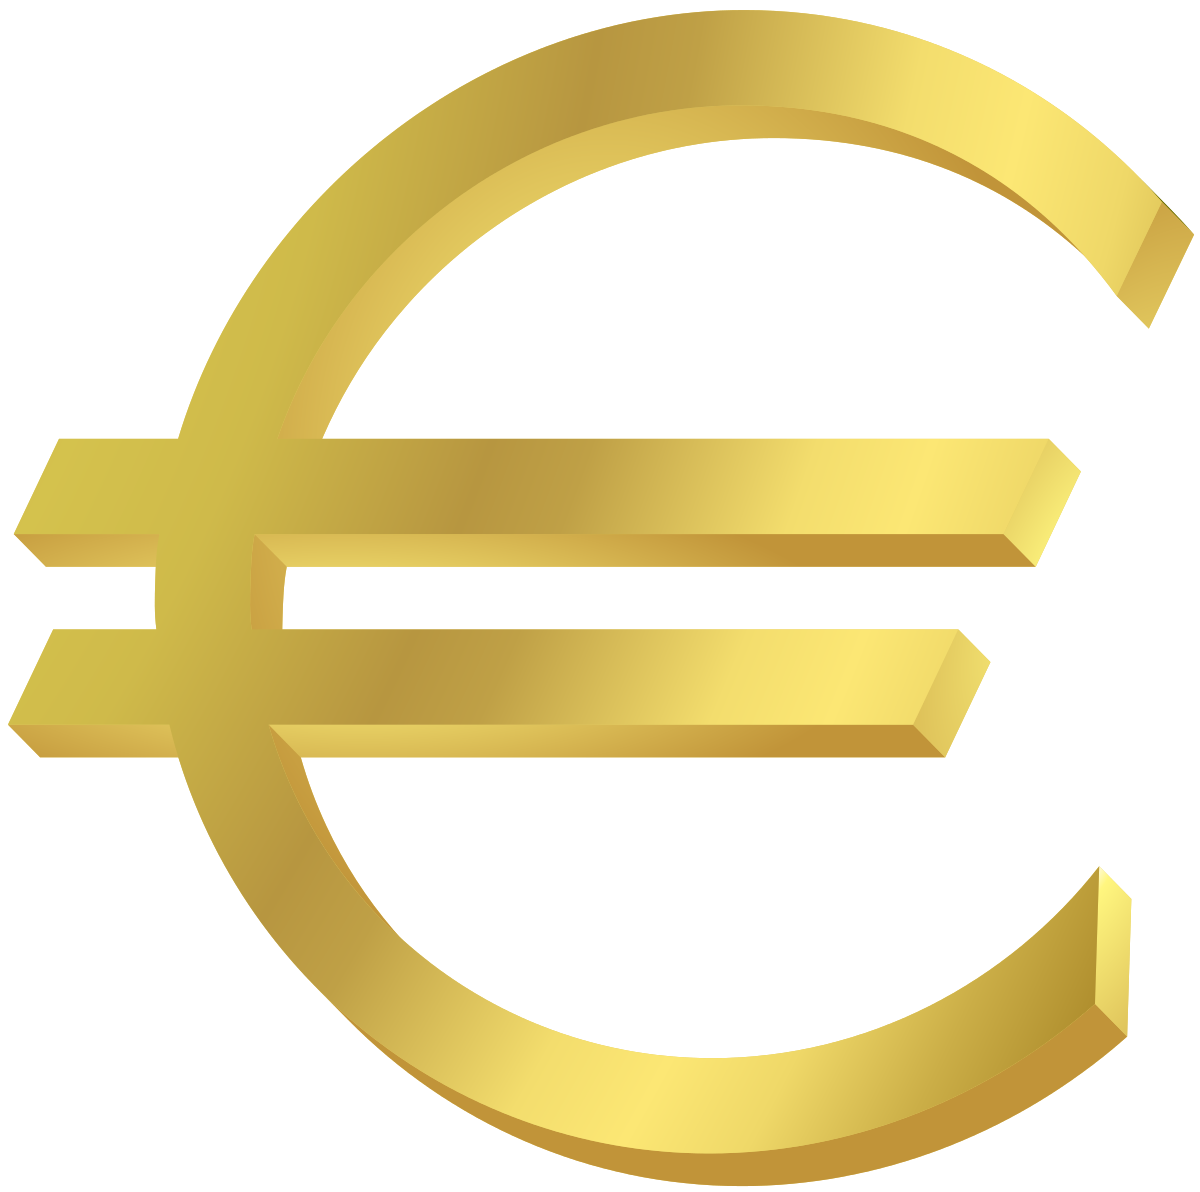 Euro_symbol_gold.svg